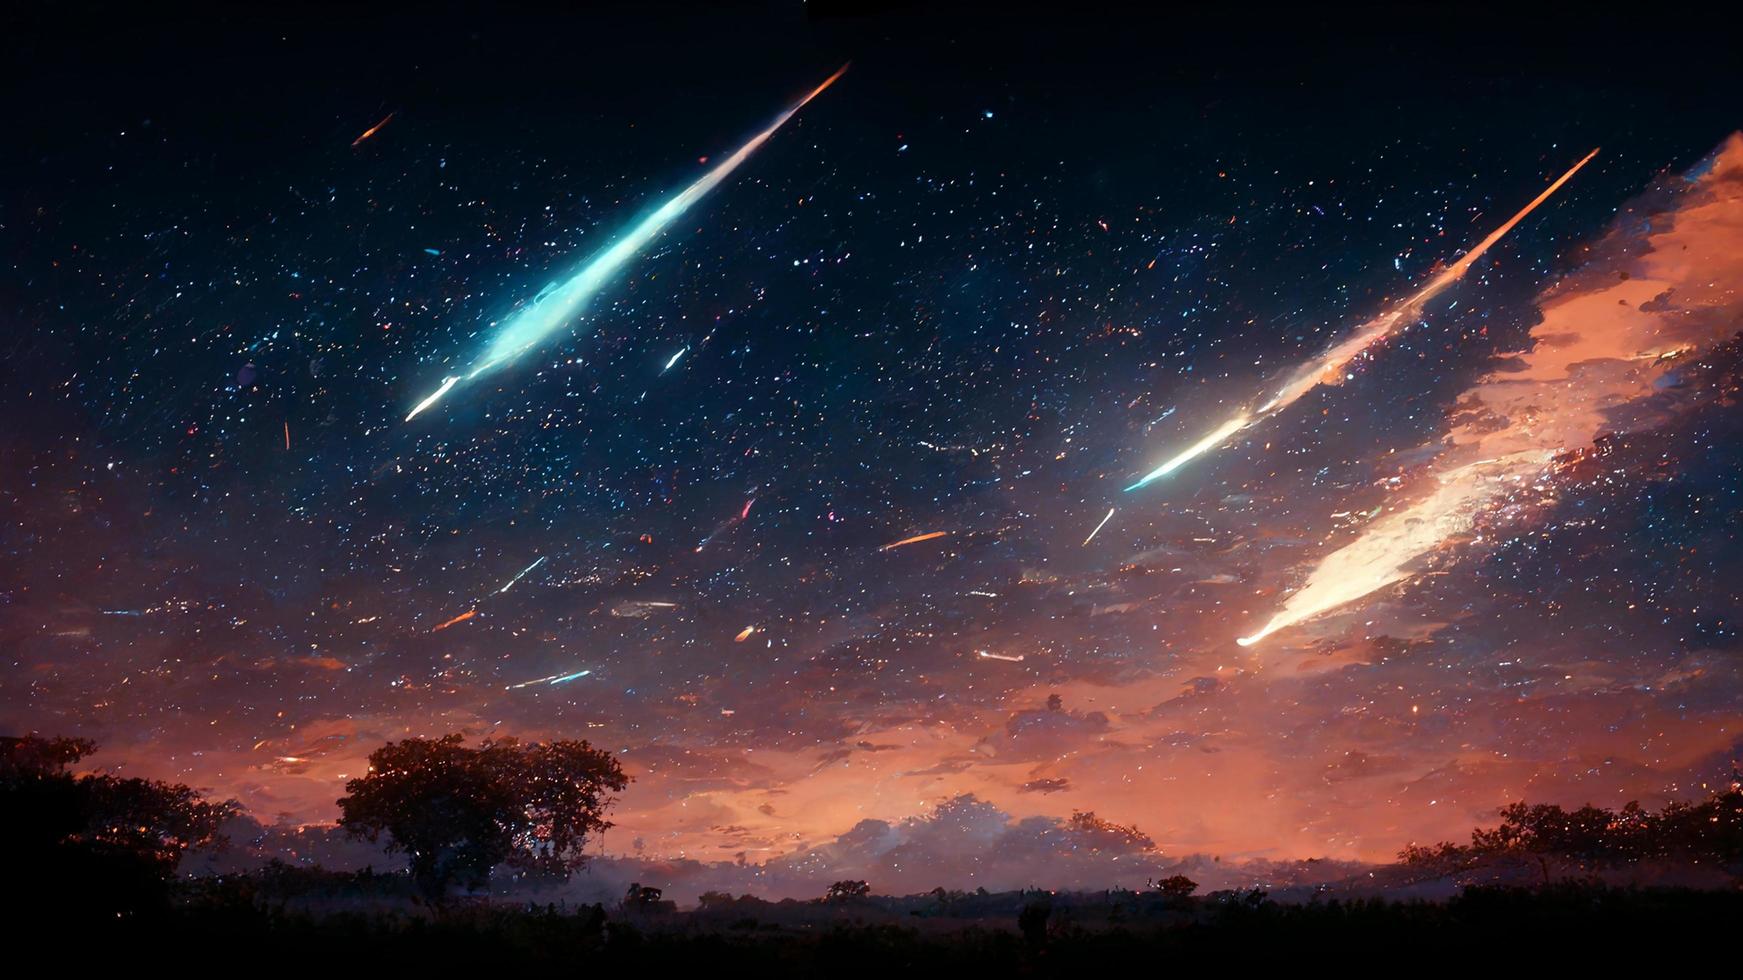 Meteor star trails on night sky background fantasy, digital art style, illustration design photo